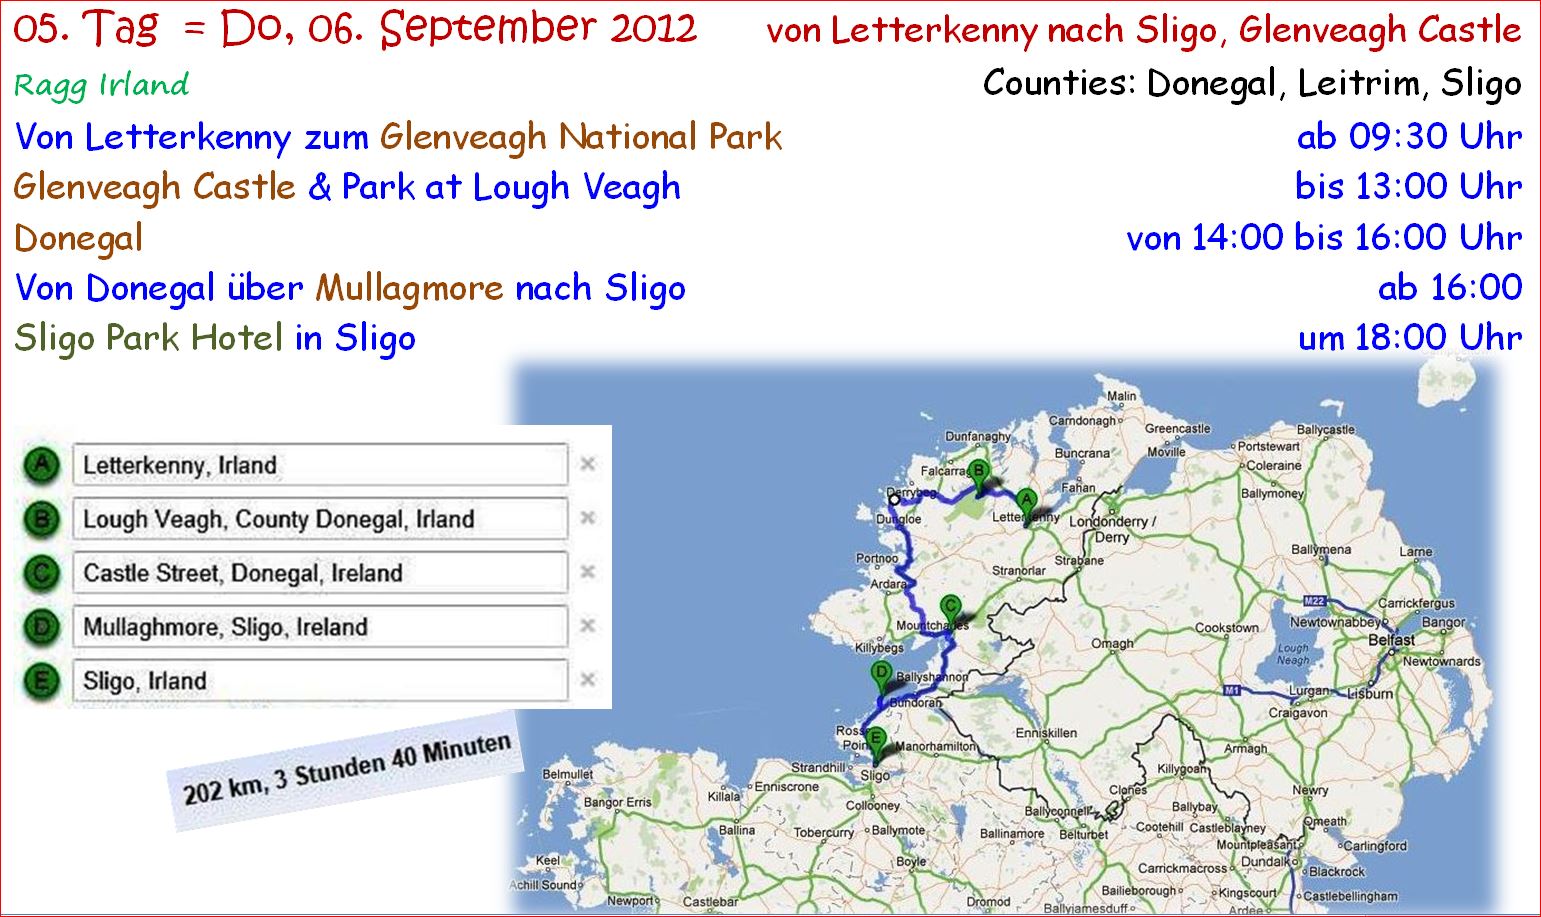 ragg 2012-09-06 - 1110Aweb - Irland - Letterkenny nach Sligo - Tag 05 - S05 B01